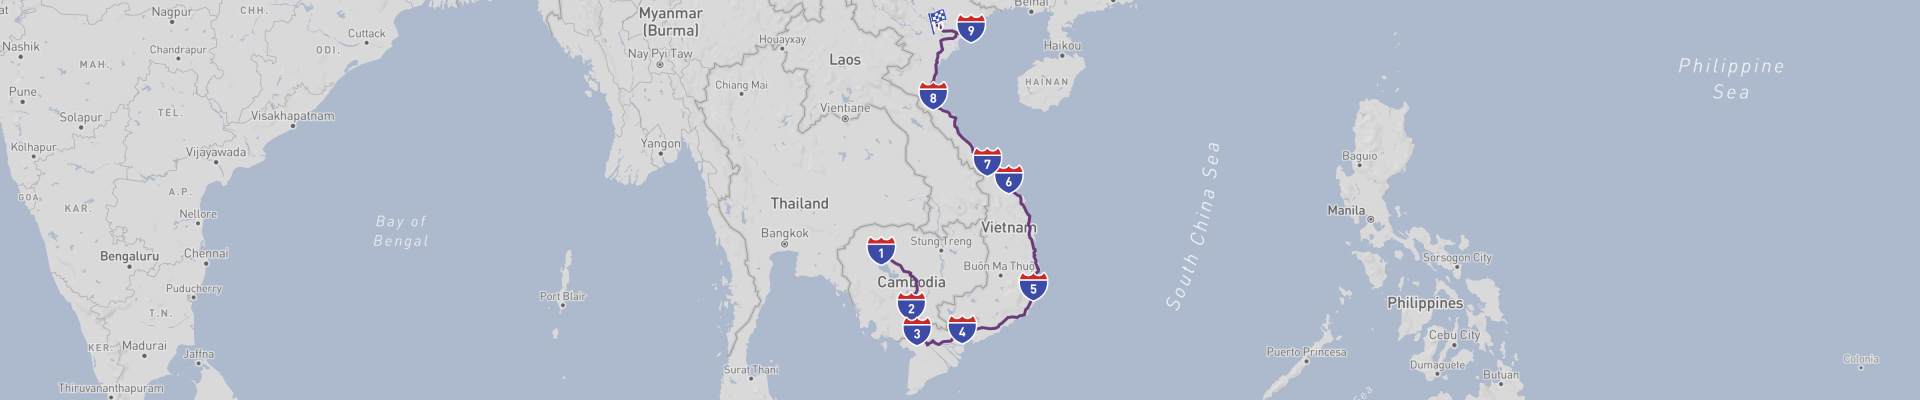 Siem Reap to Hanoi Classic Road Trip